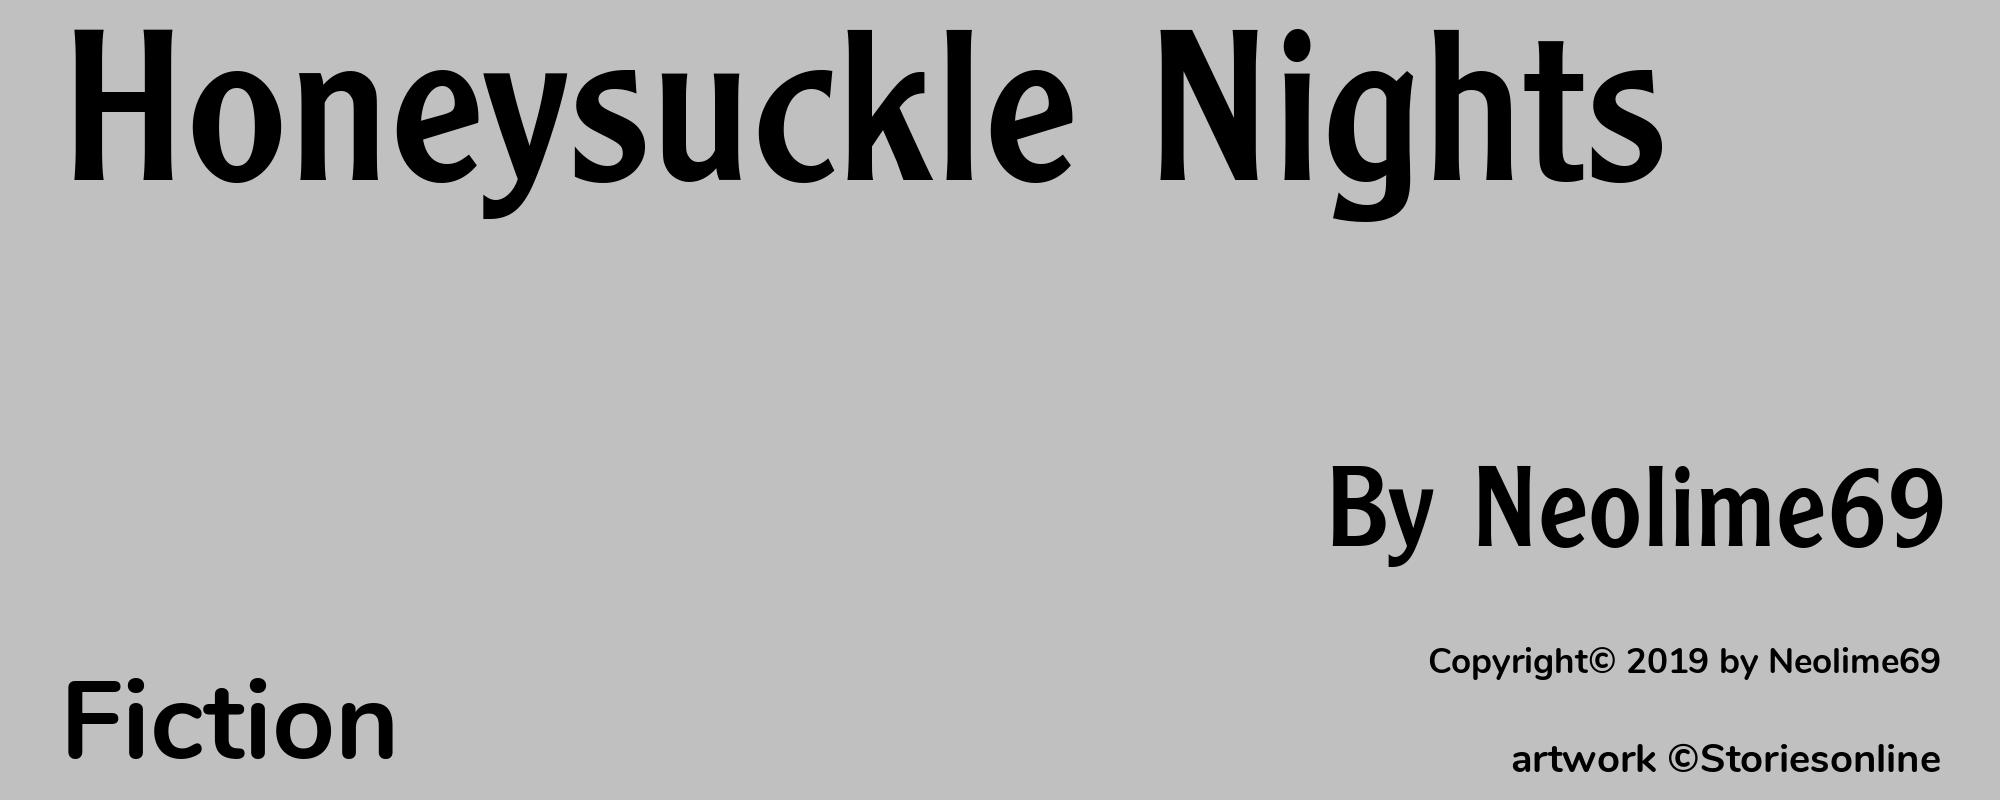 Honeysuckle Nights - Cover